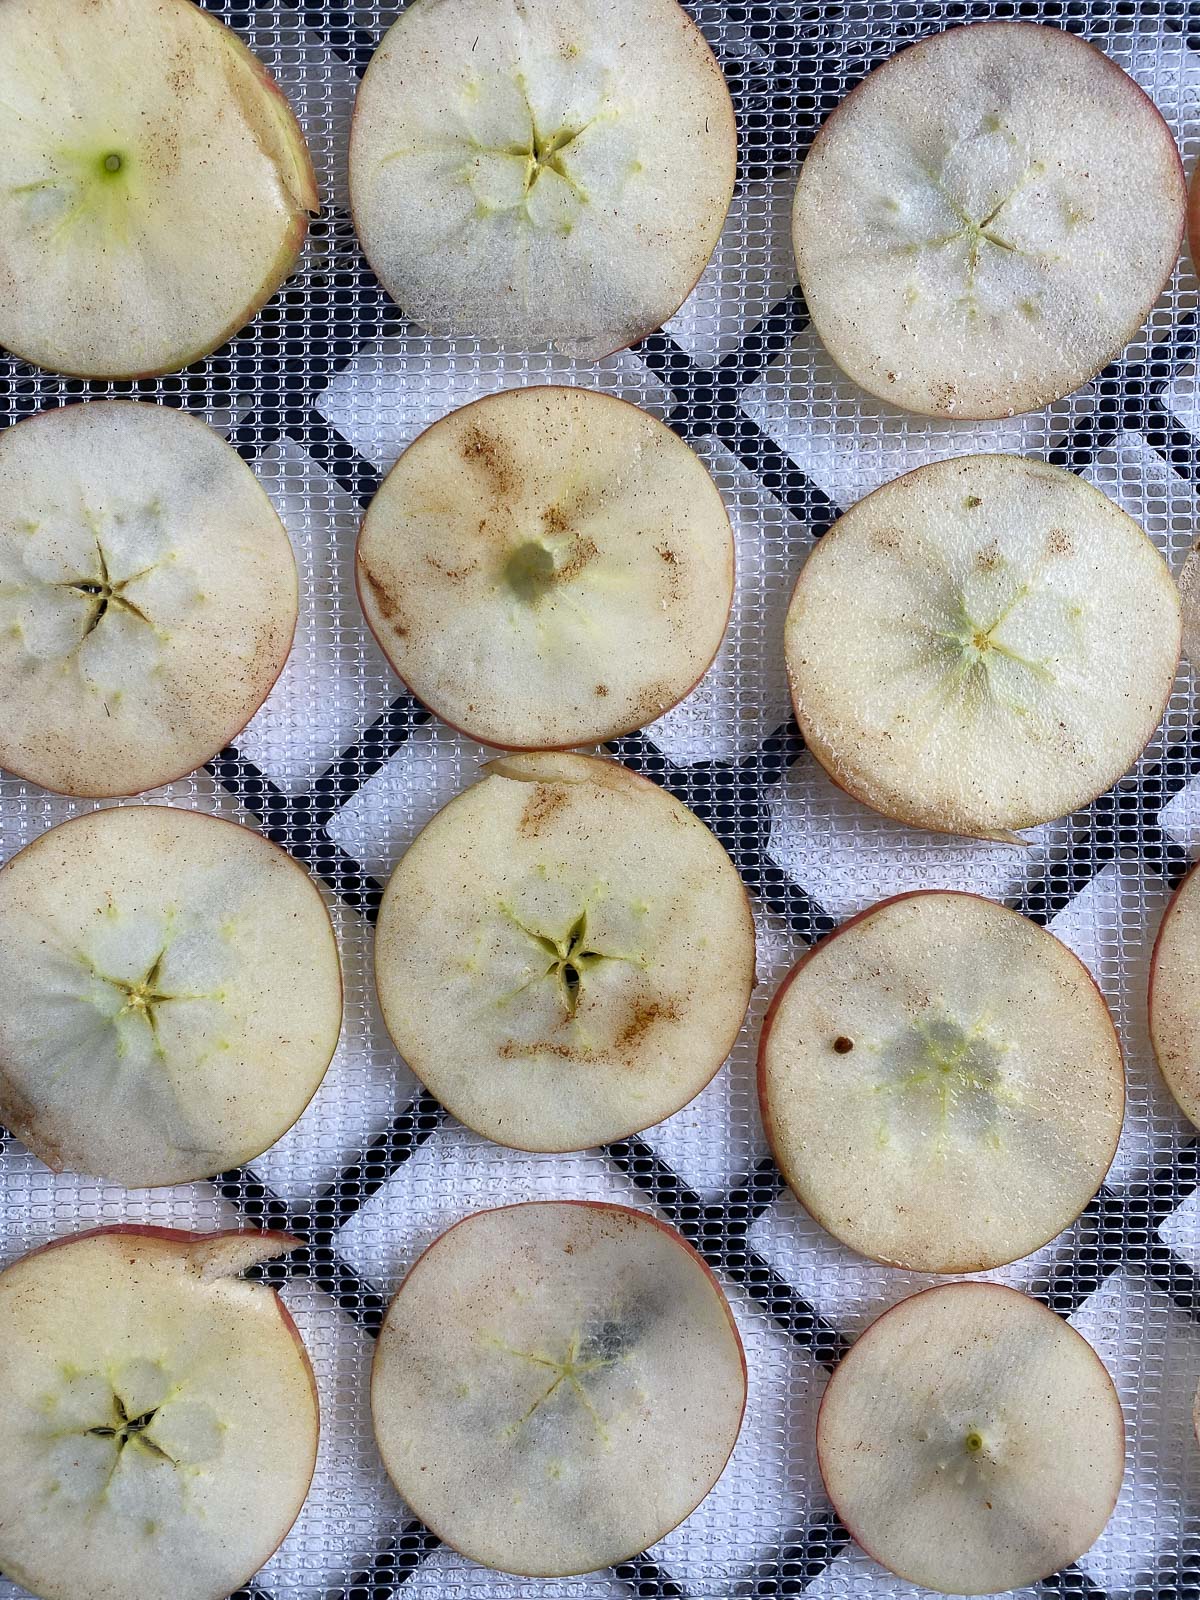 sliced apples spread evenly on dehydrator tray